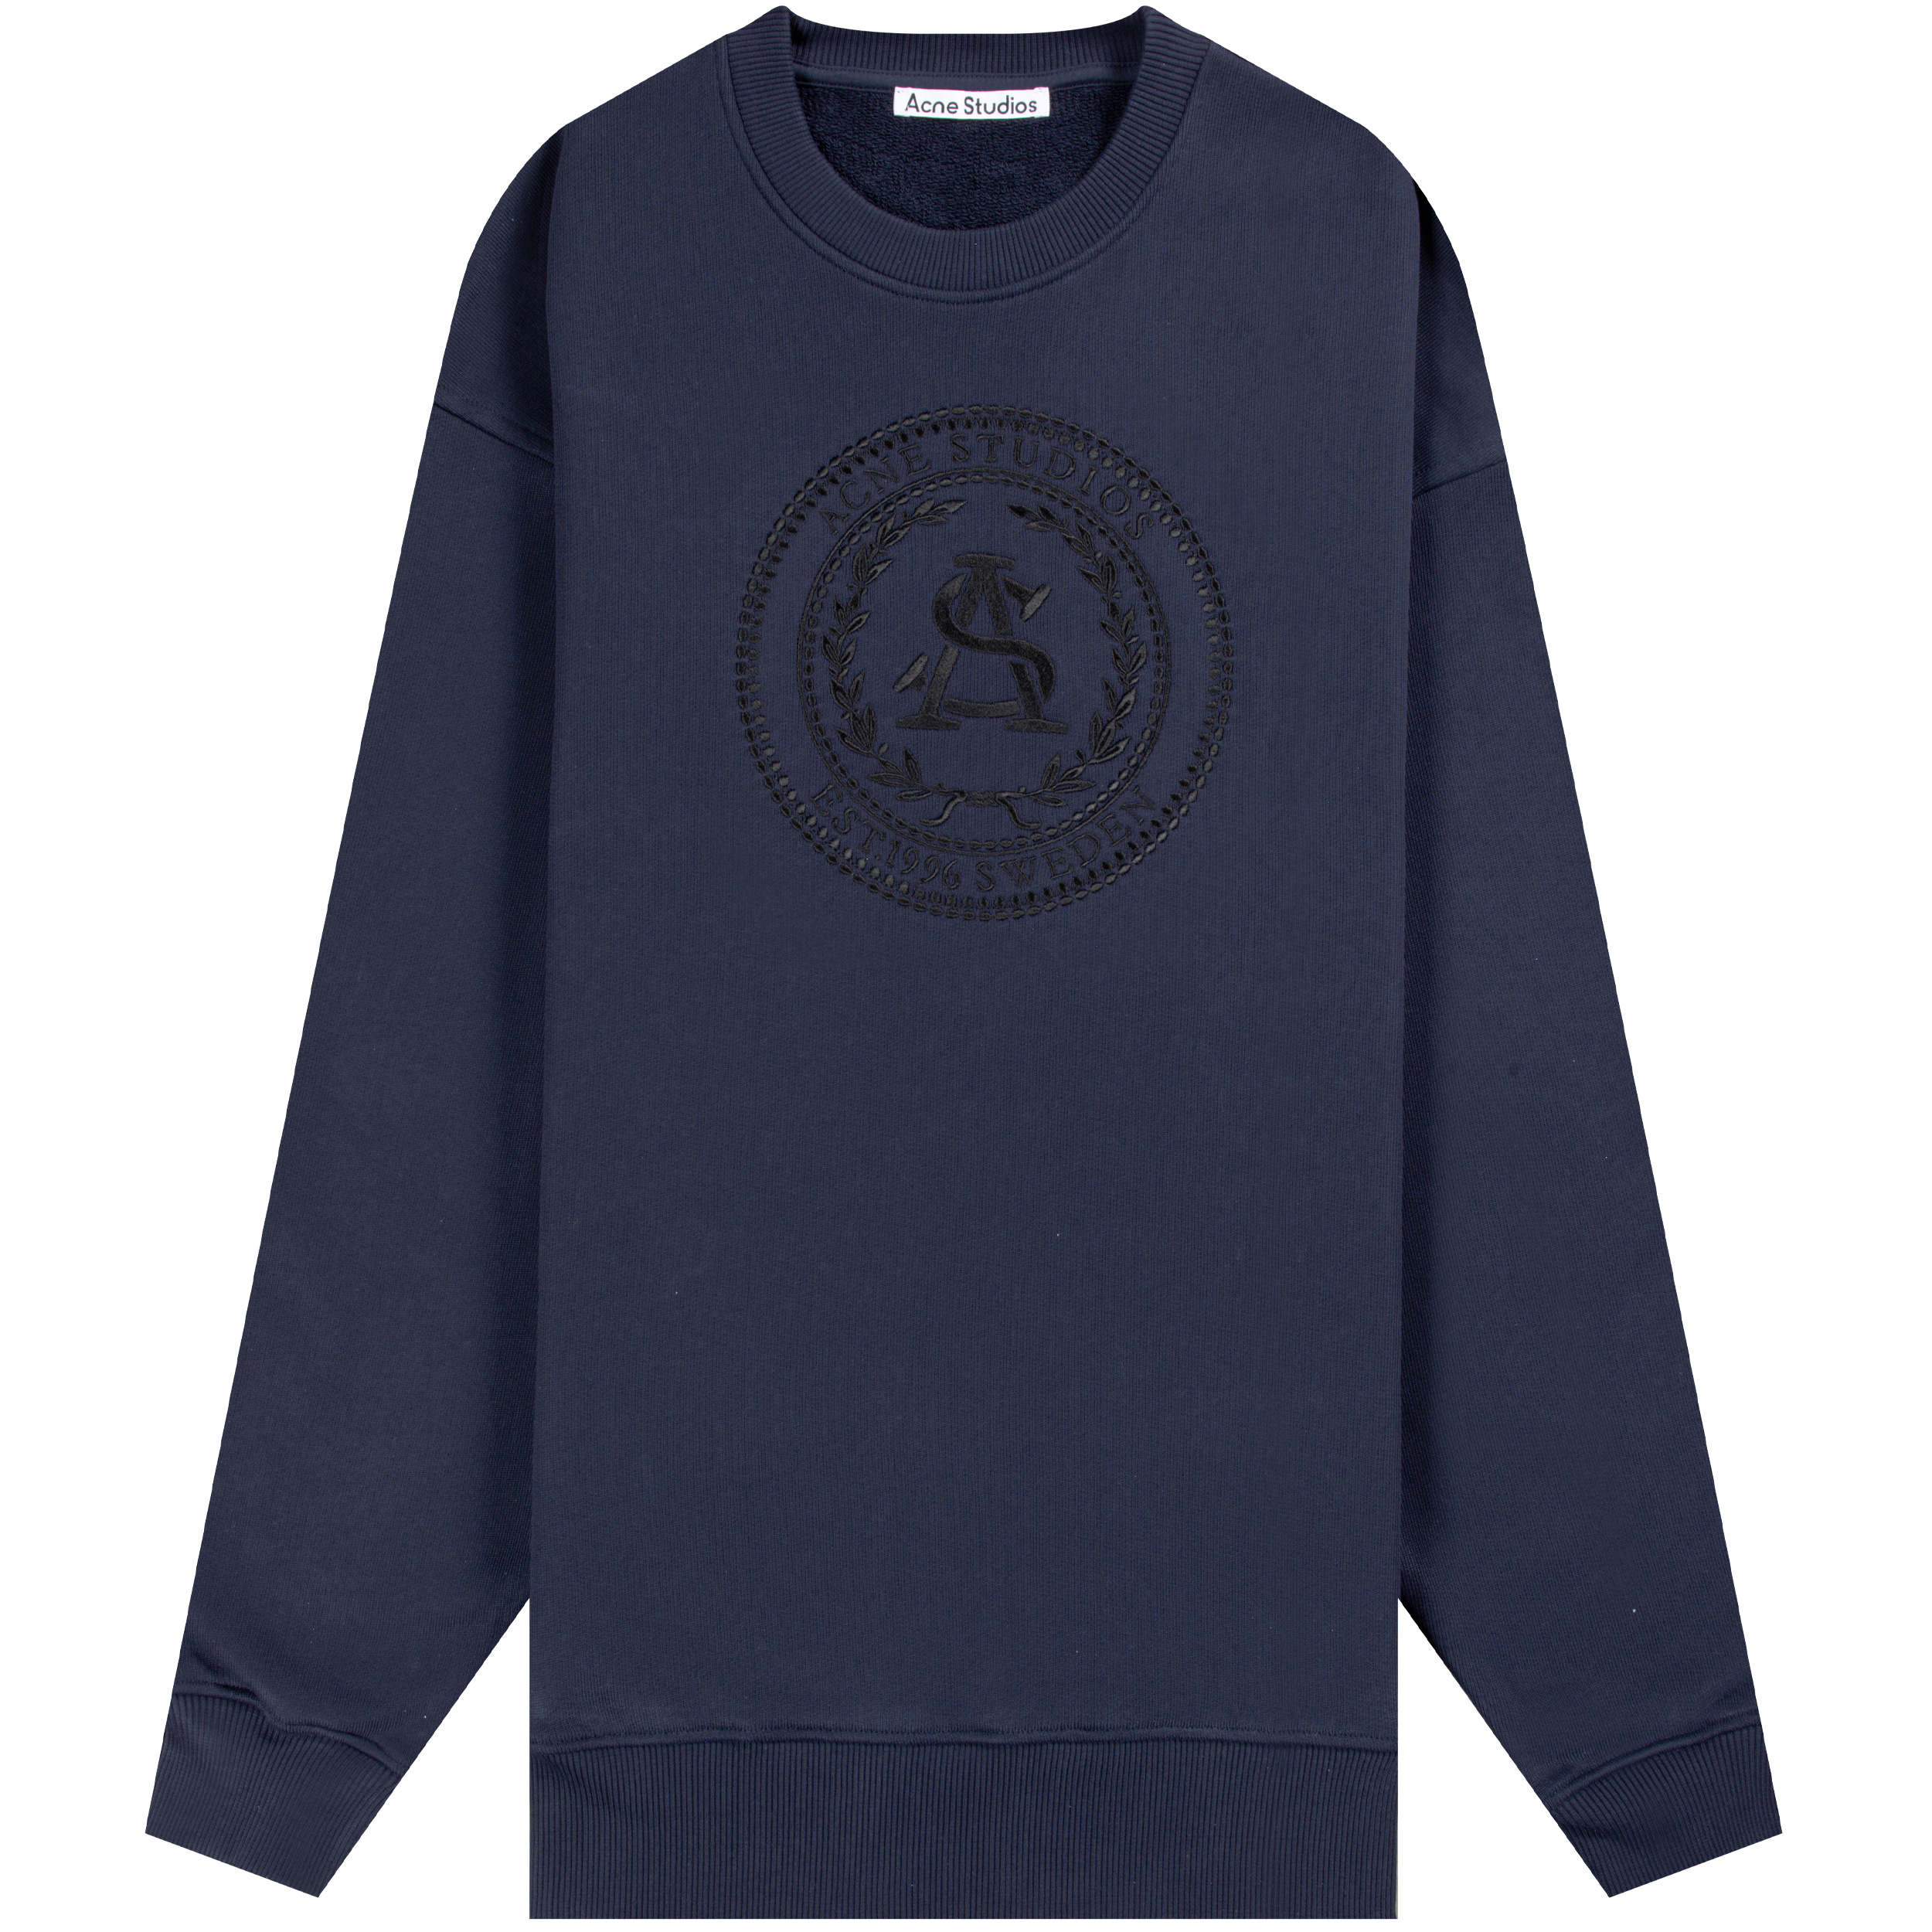 Acne Studios ’Forban Embroided’ Chest Logo Sweatshirt Navy